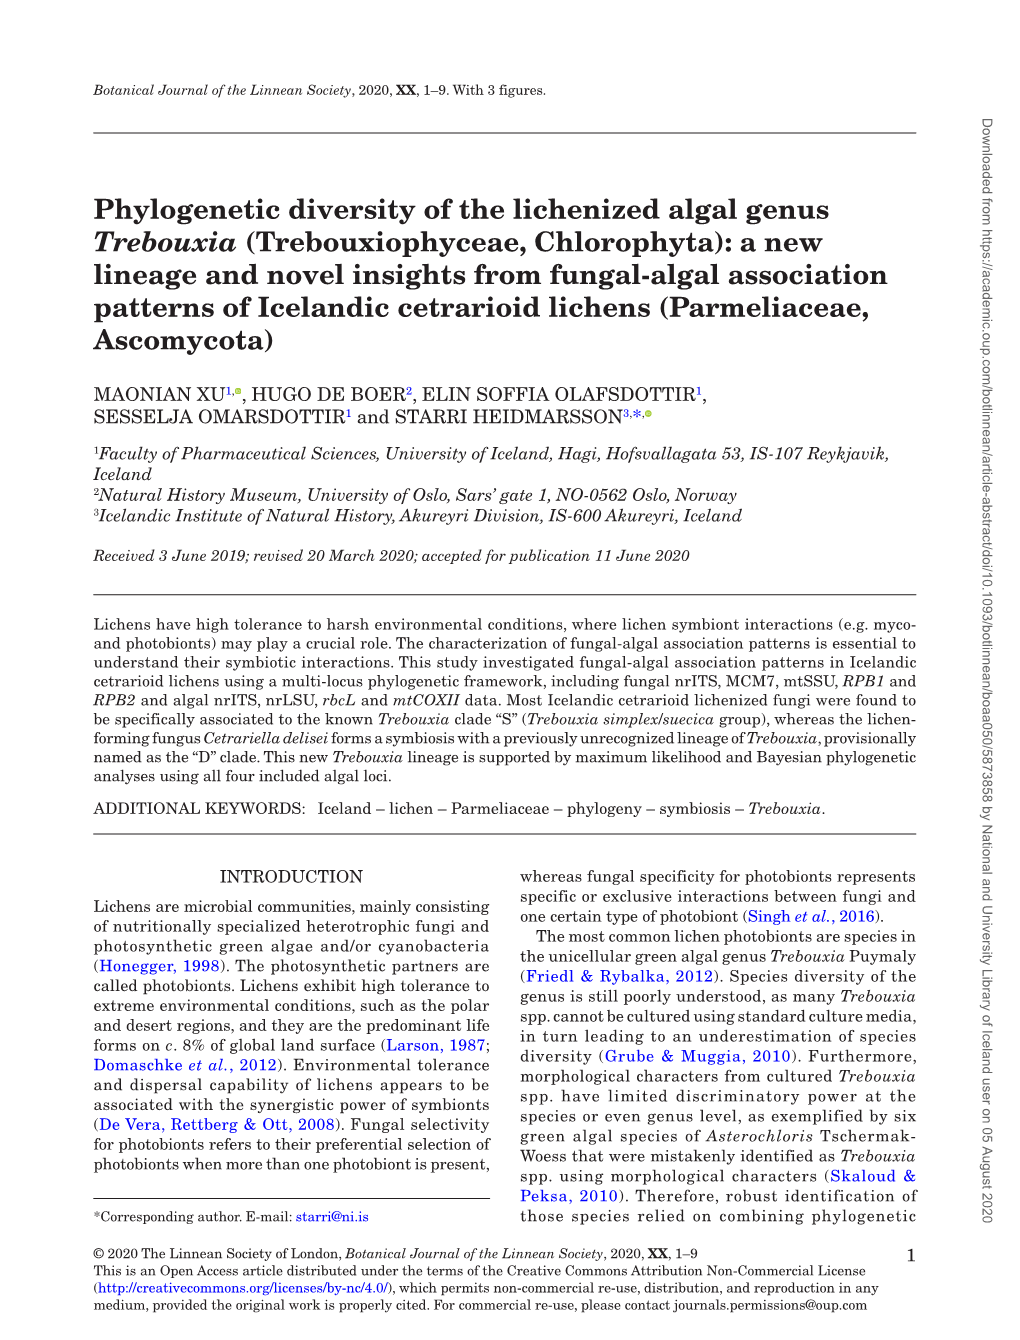 Phylogenetic Diversity of the Lichenized Algal Genus Trebouxia (Trebouxiophyceae, Chlorophyta): a New Lineage and Novel Insights